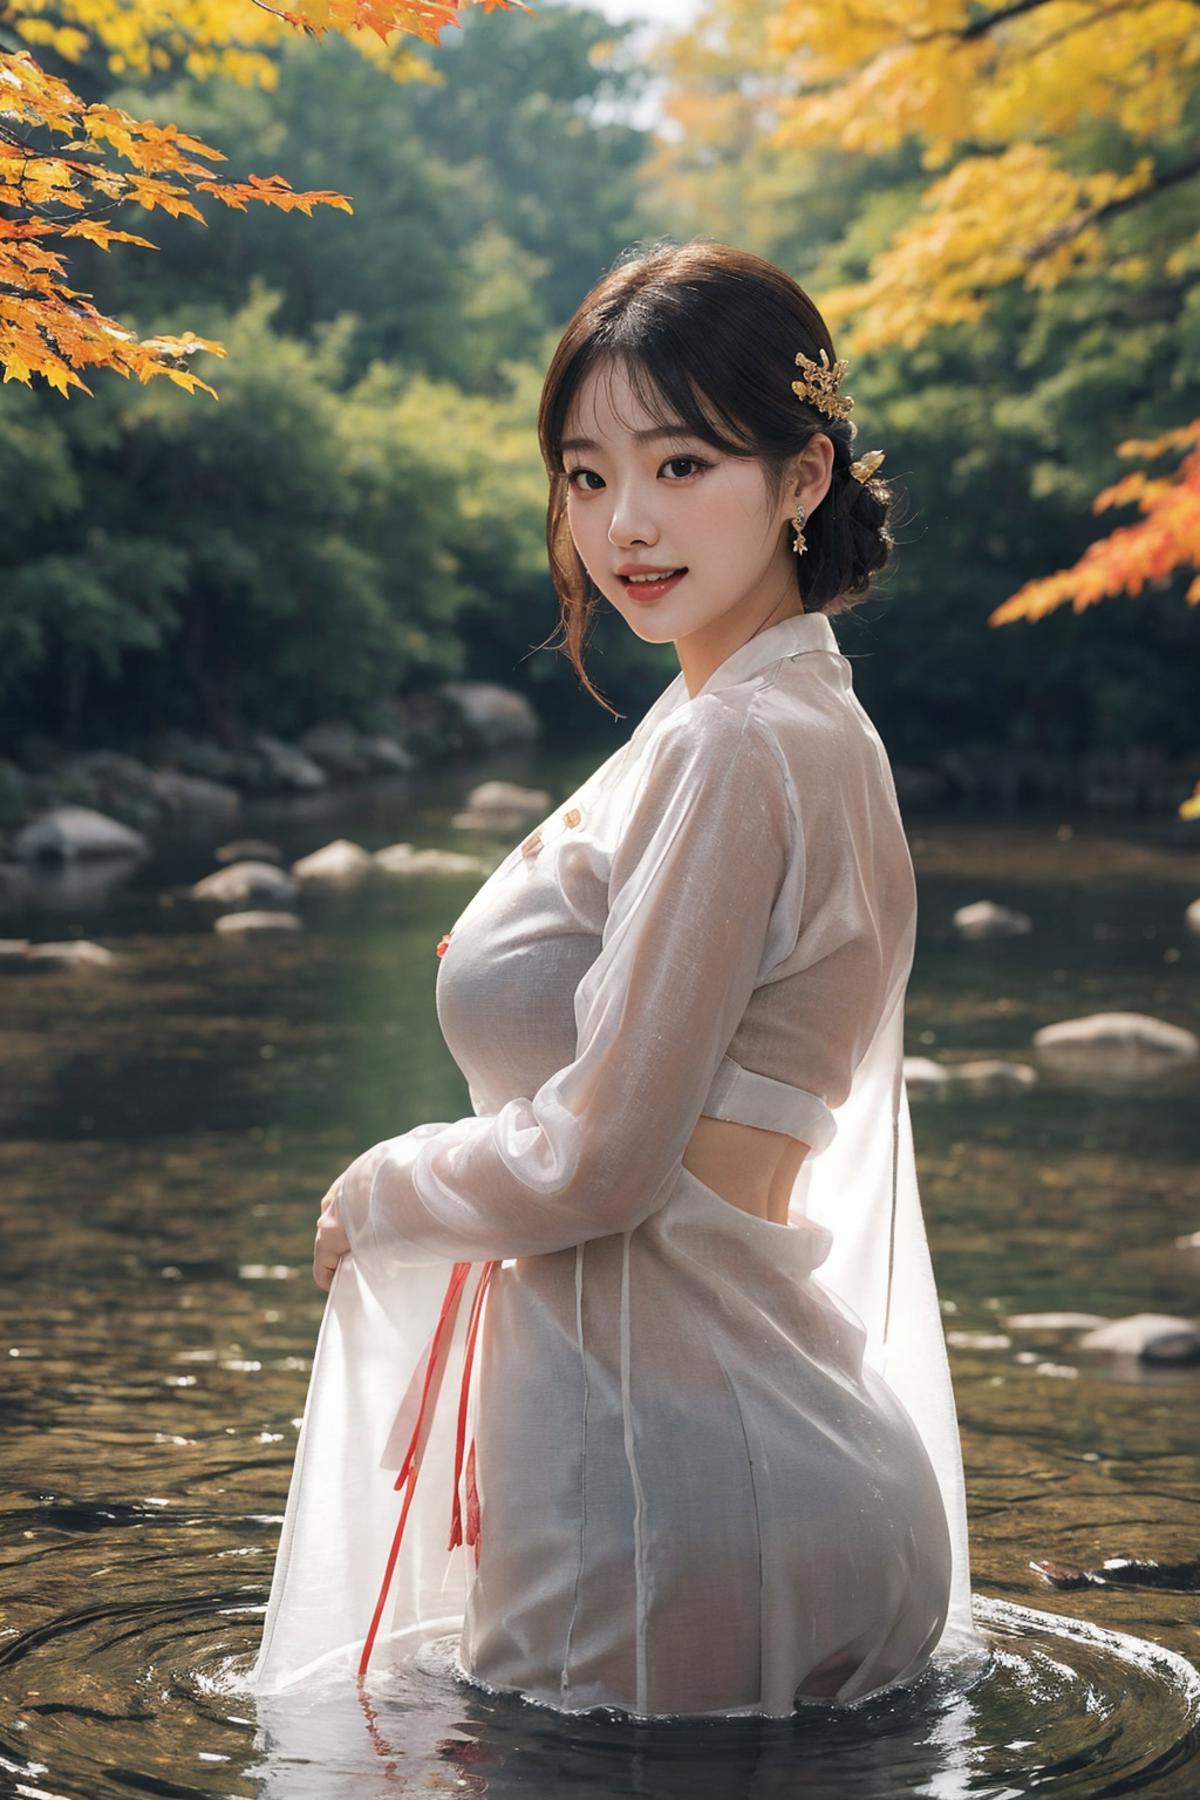 Female Noble Class Hanbok - Korea Clothes image by joyy114